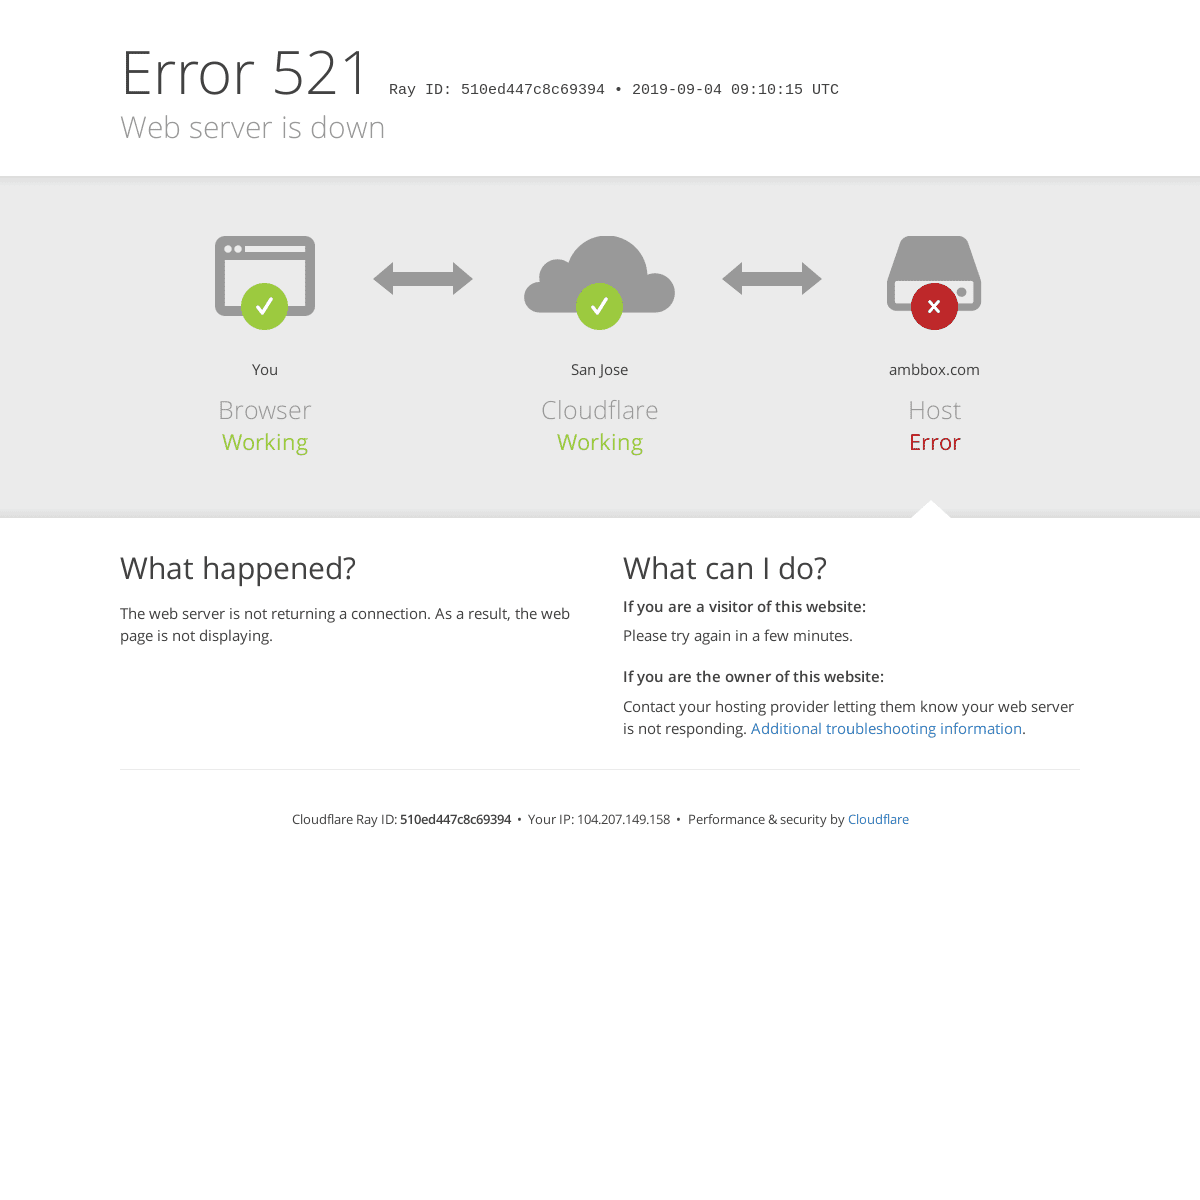 ambbox.com | 521: Web server is down